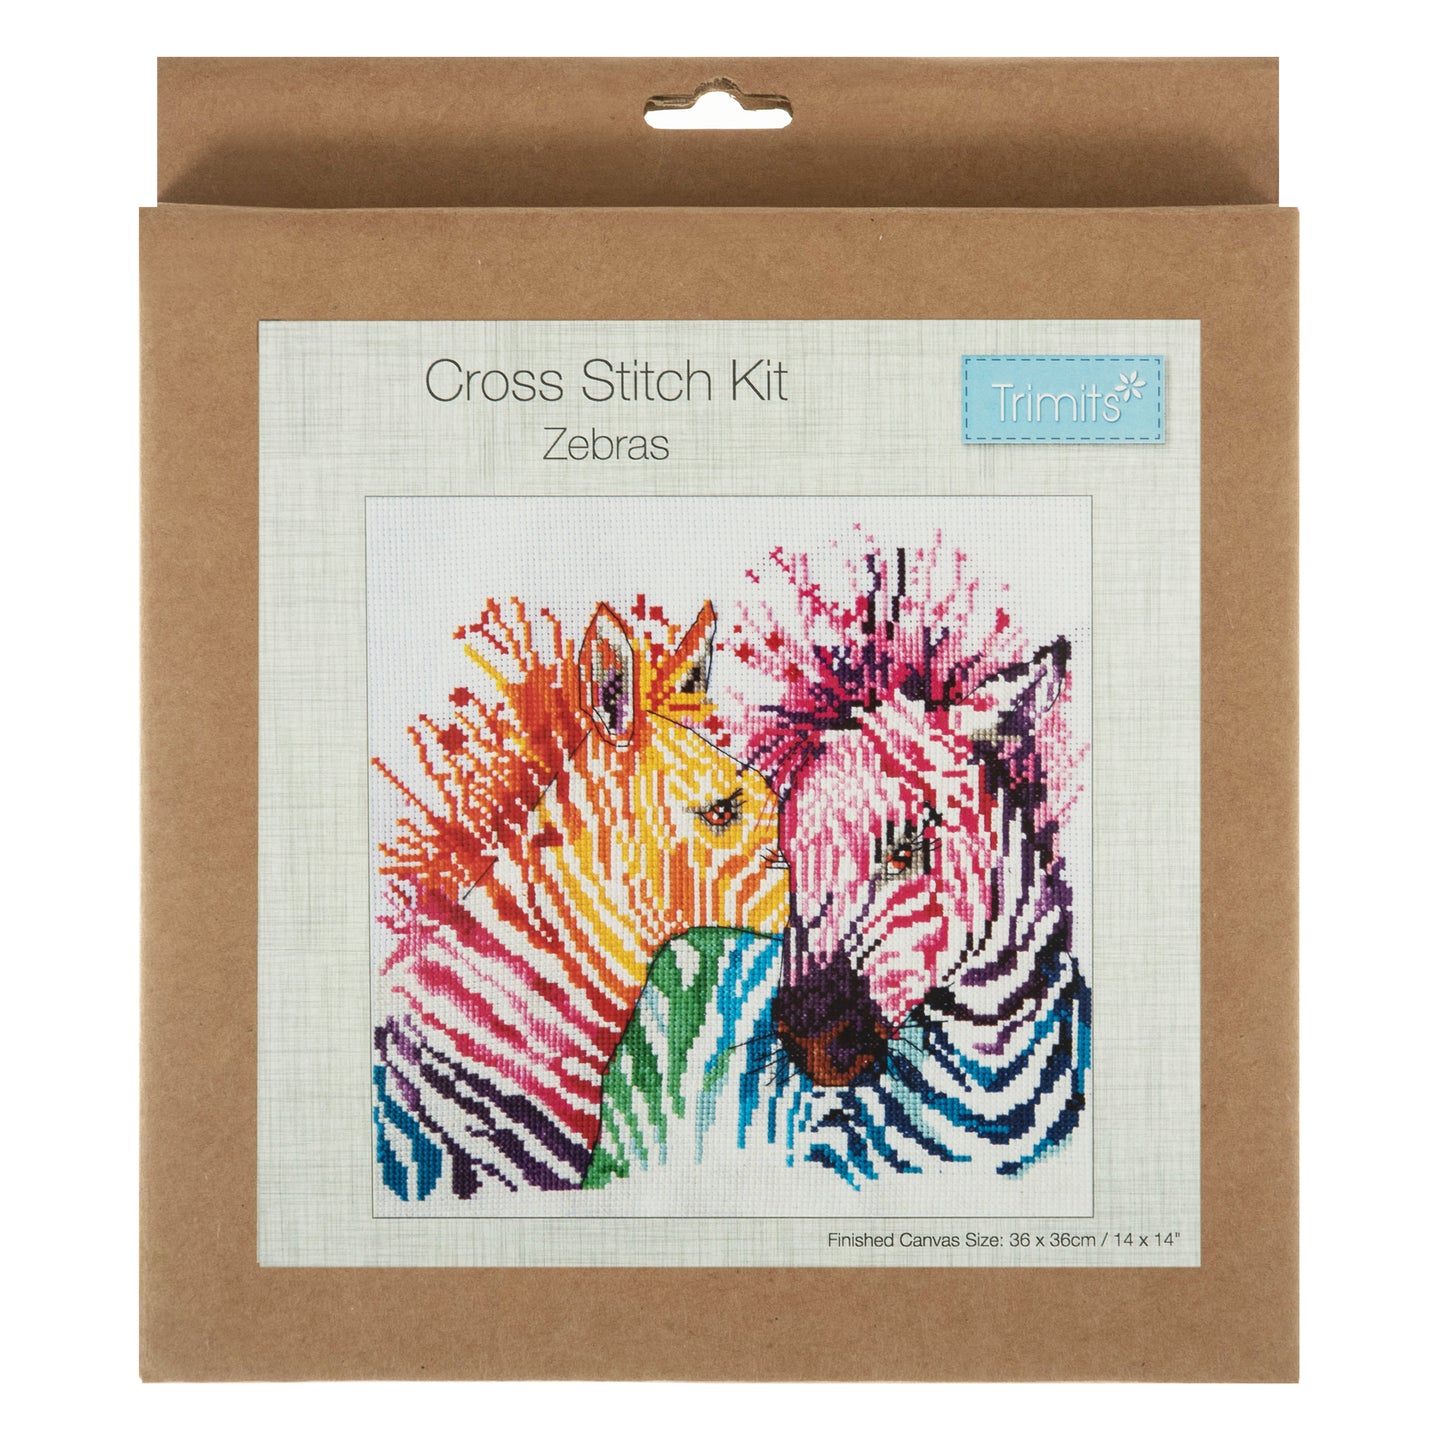 Trimits Counted Cross Stitch Kit Large Zebras